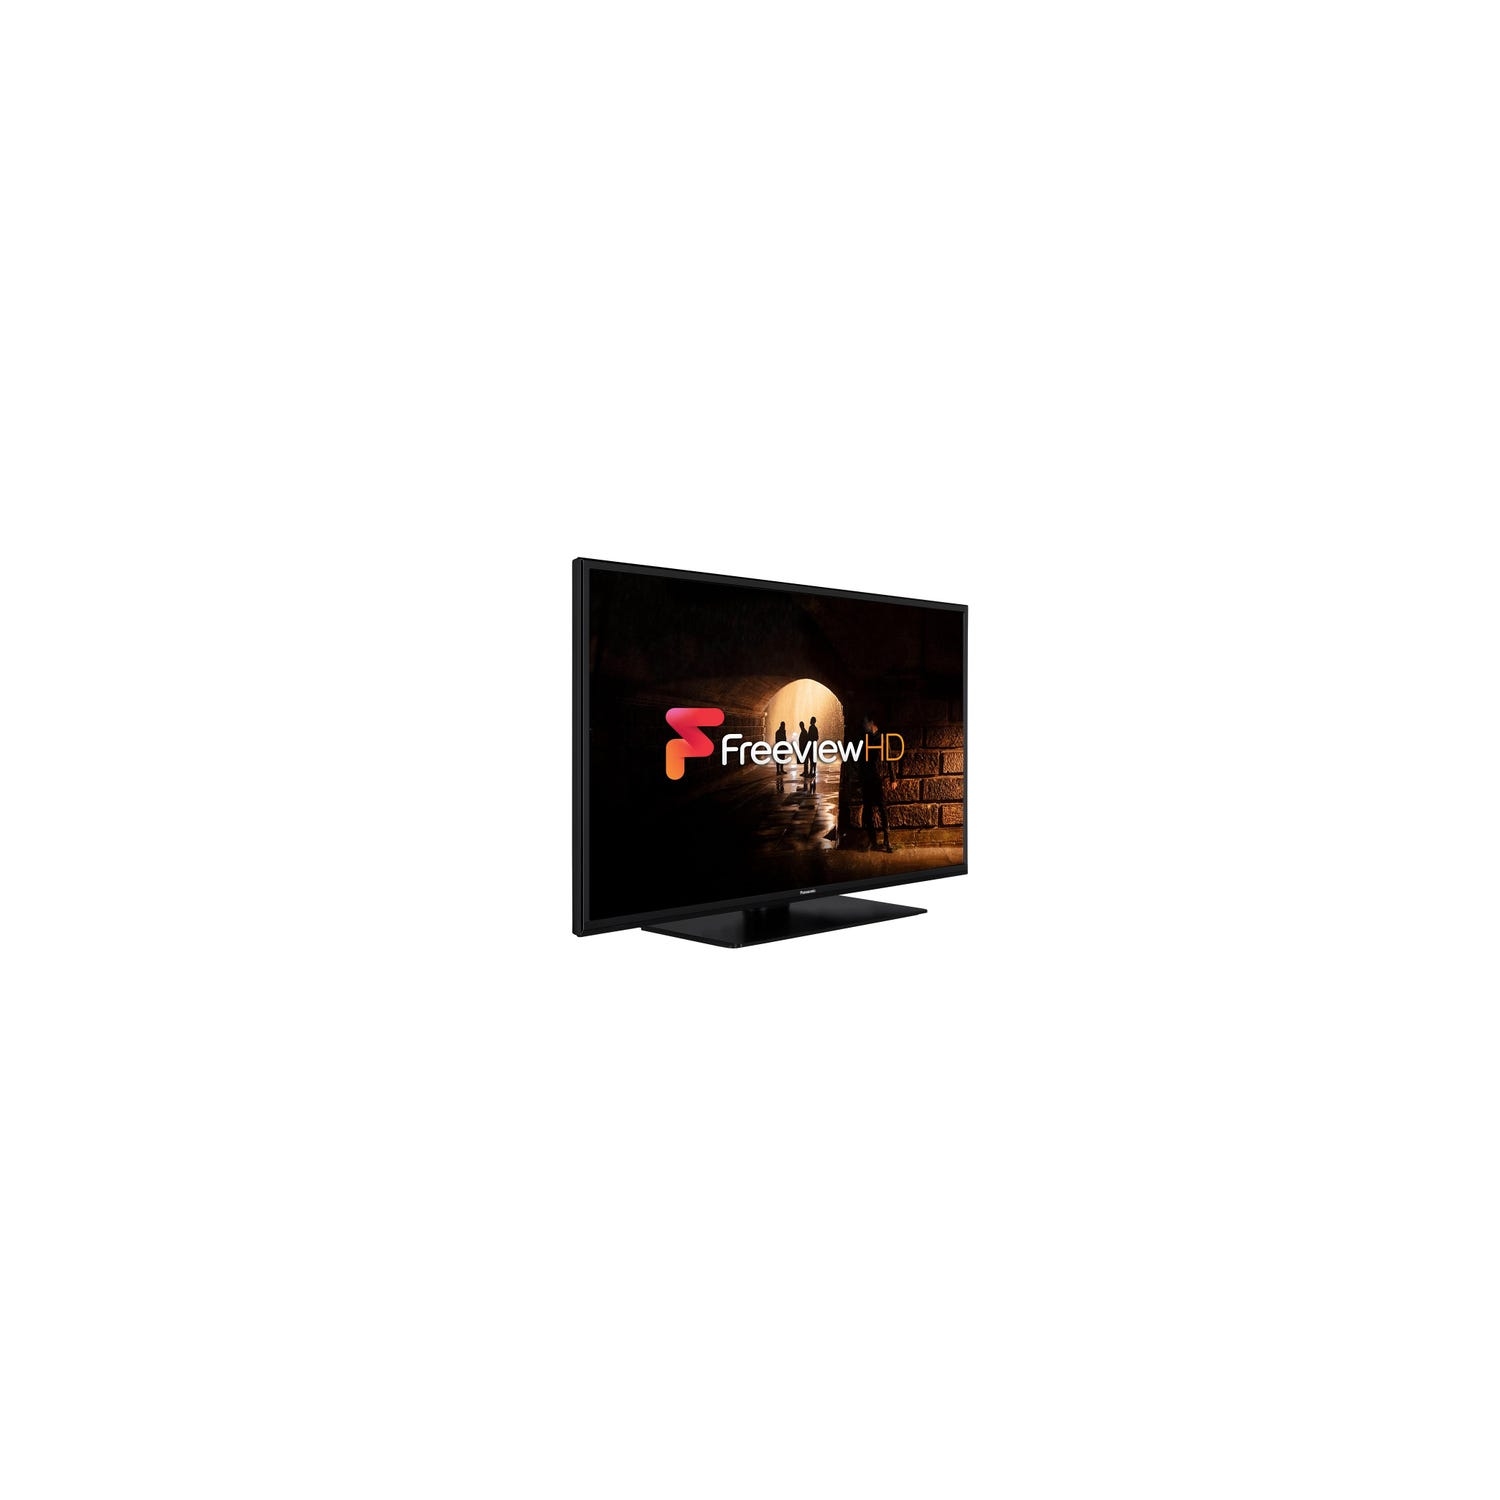 Panasonic 43" Full HD LED TV with Freeview HD - TX-43G301B  NEW 2020 - 3